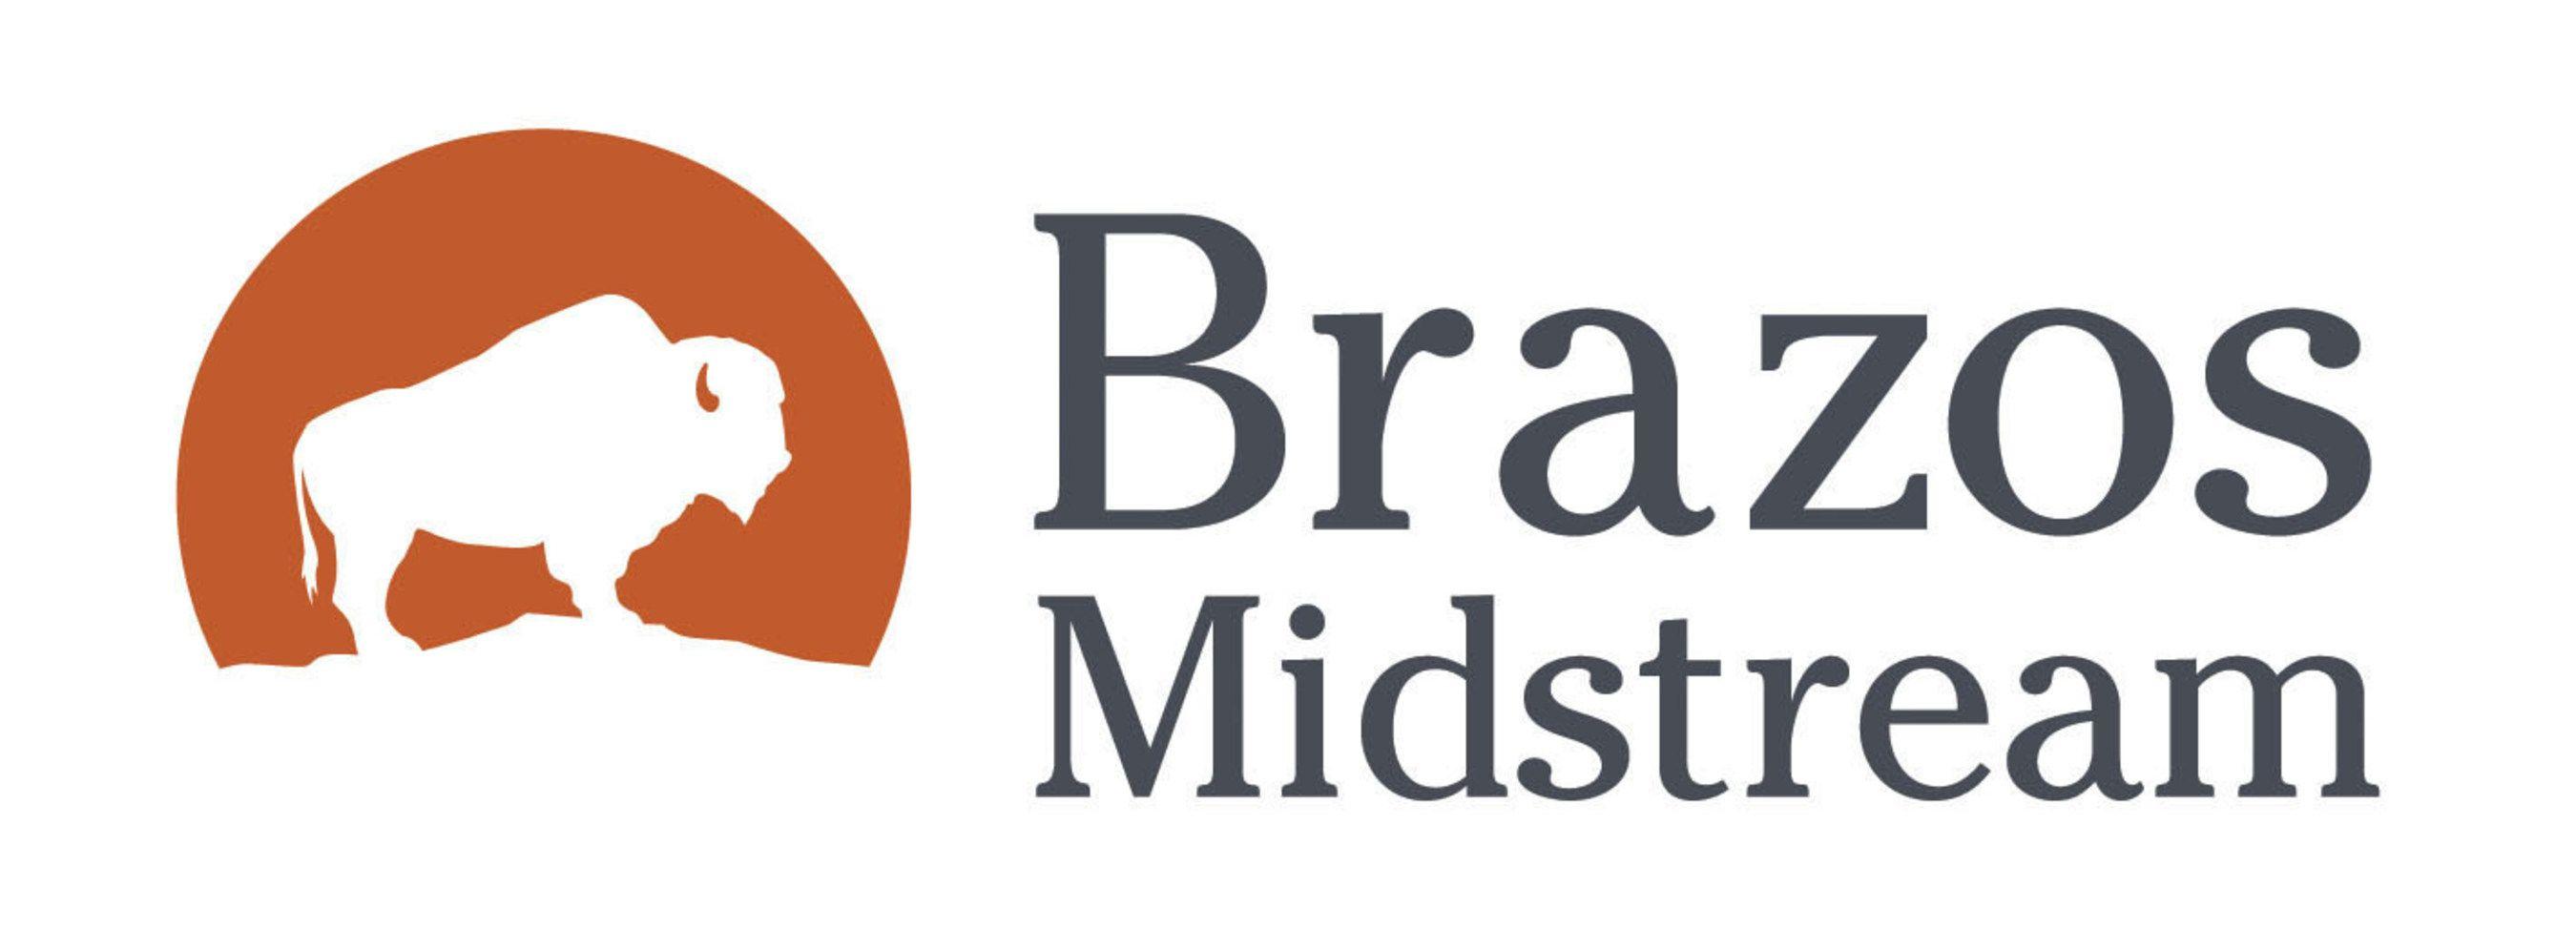 Brazos Logo - Brazos Midstream and Old Ironsides Energy Partner to Pursue